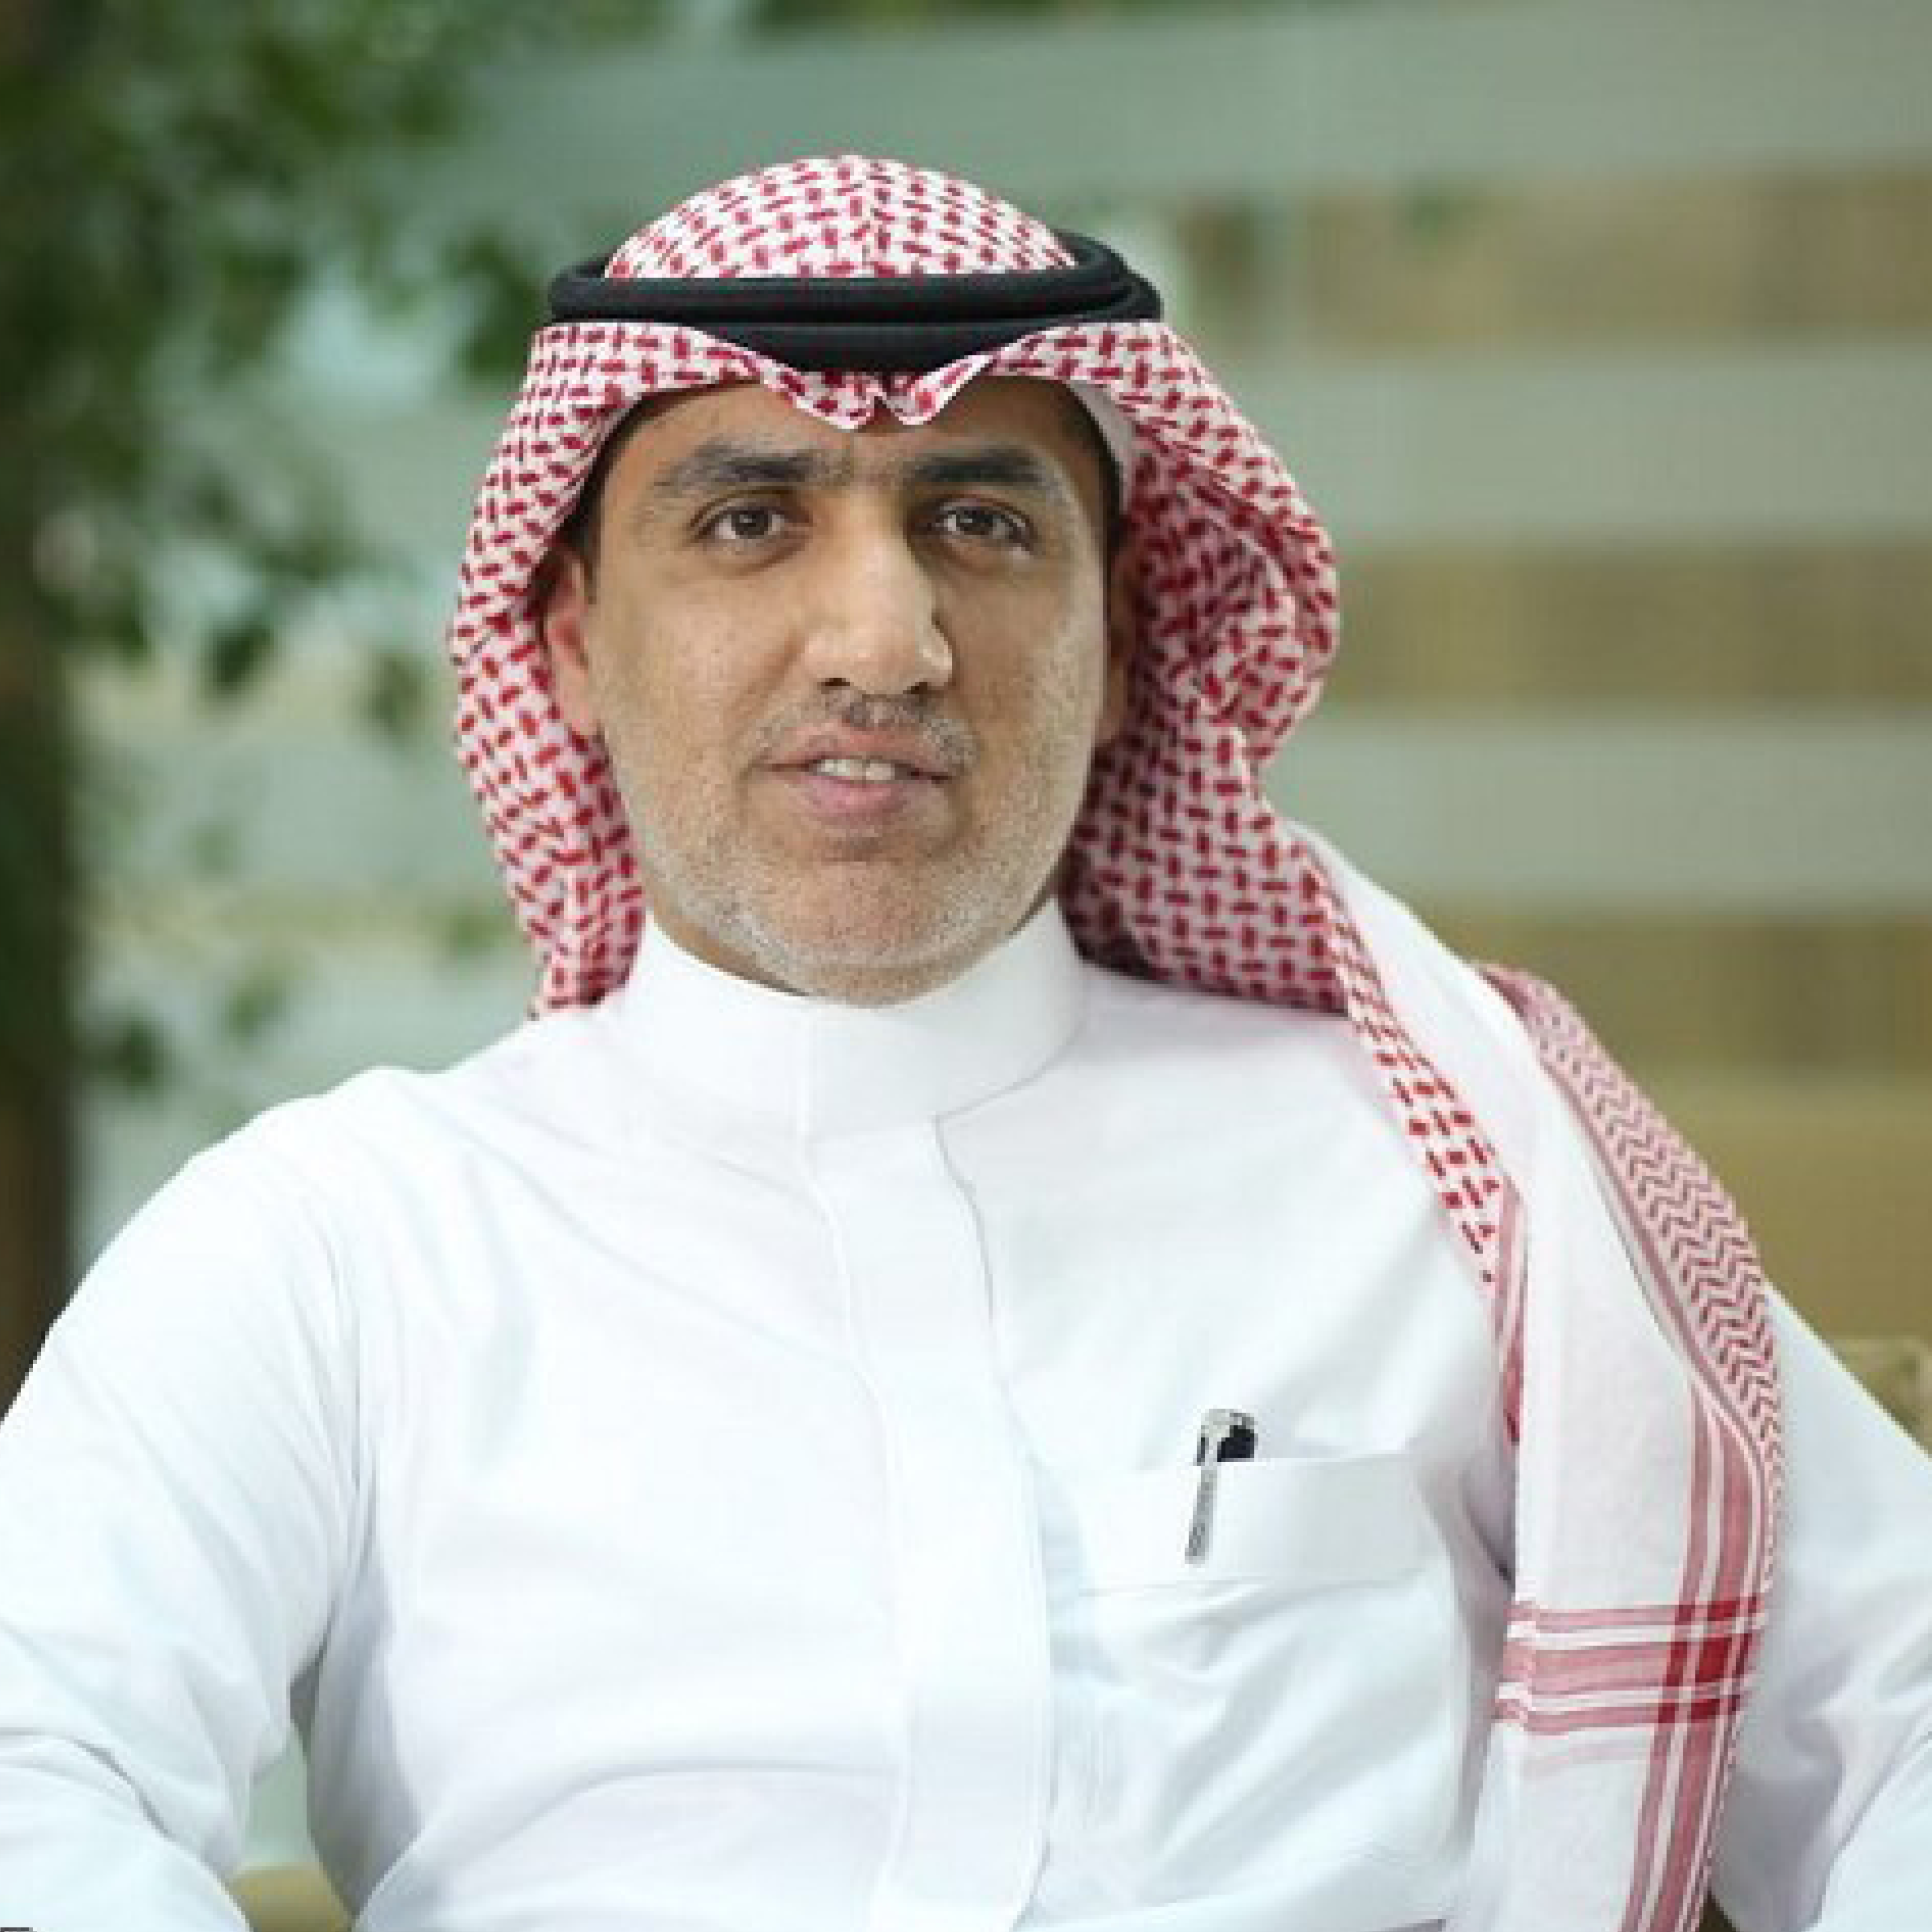 Mr. Abdulrahman A. Al-Aiban